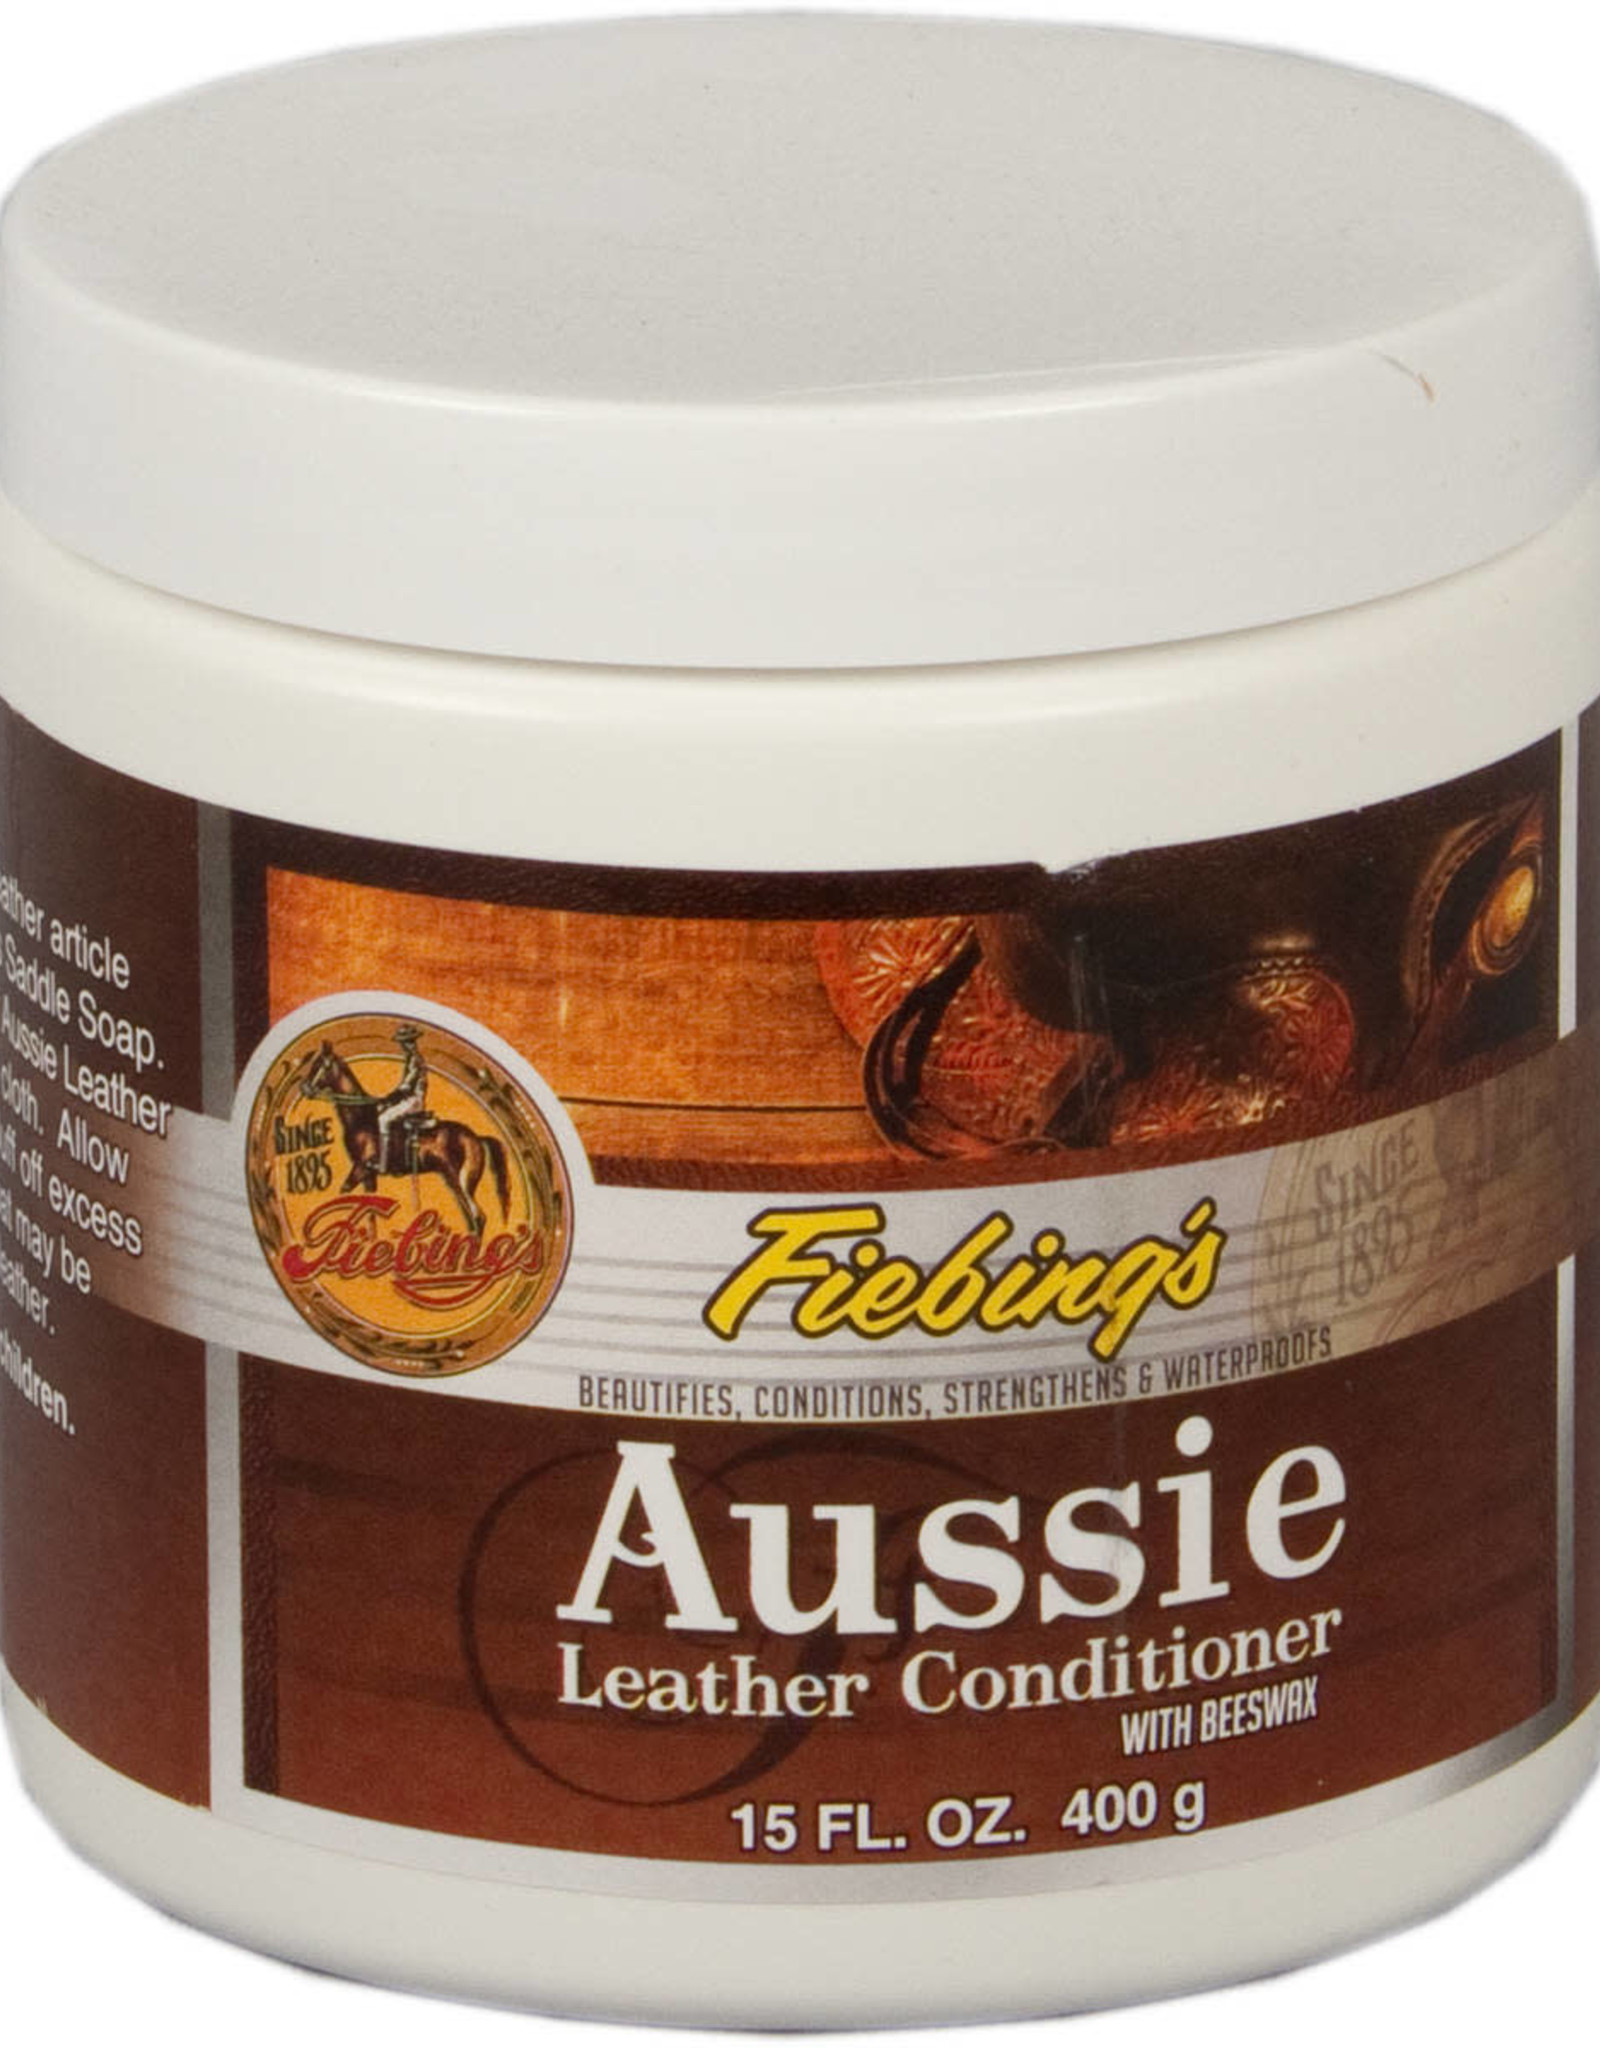 Auusie Leather Conditioner - Fiebings 15oz